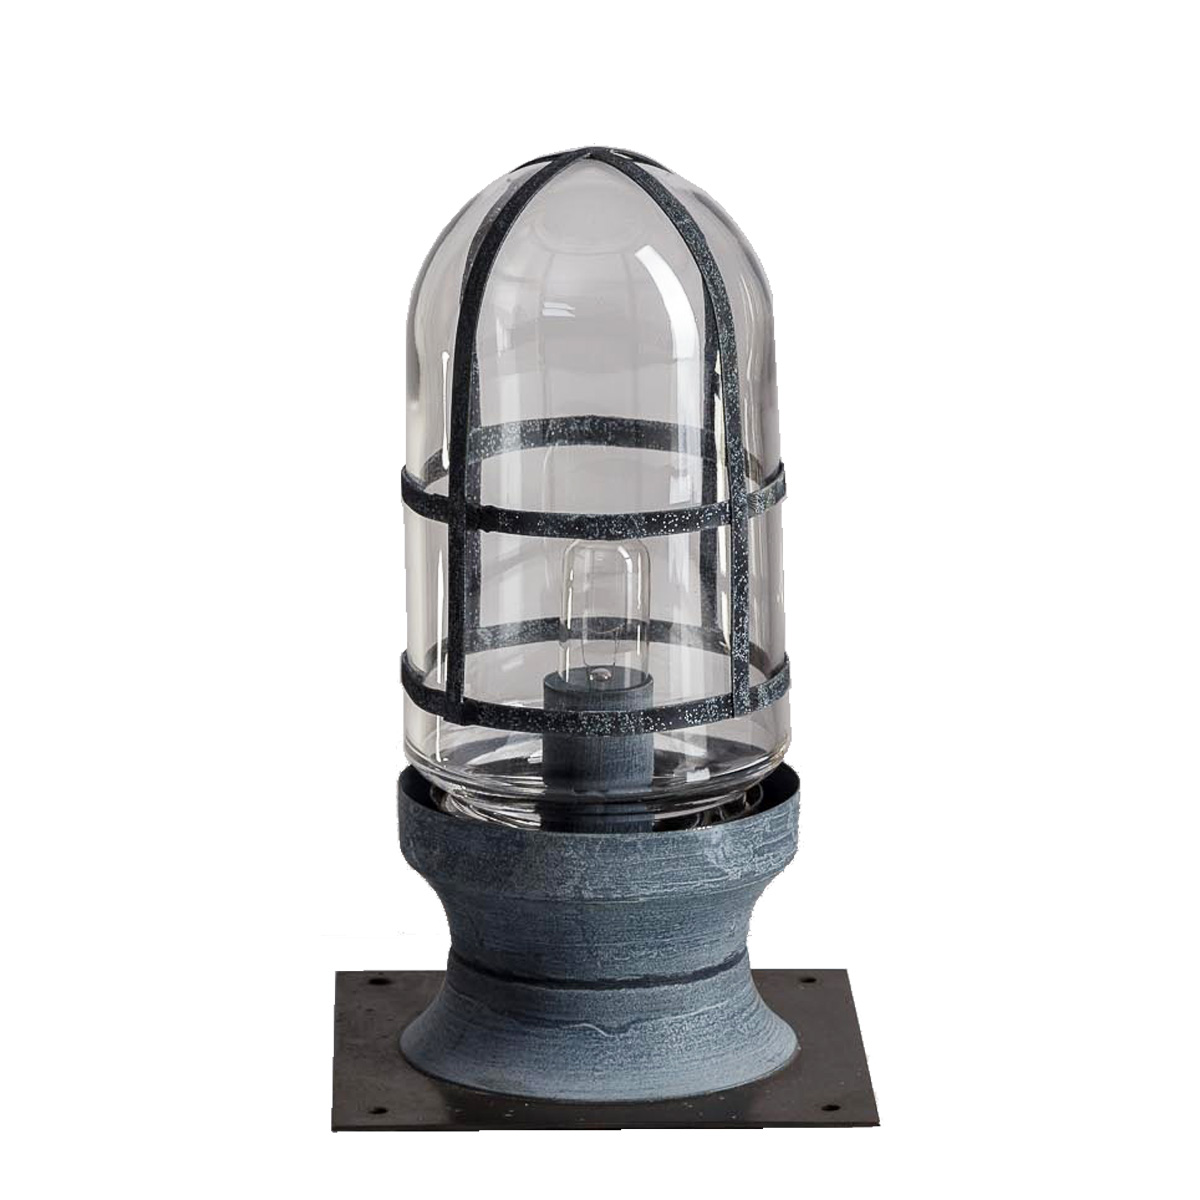 Small industrial style pedestal light Beg Meil 22